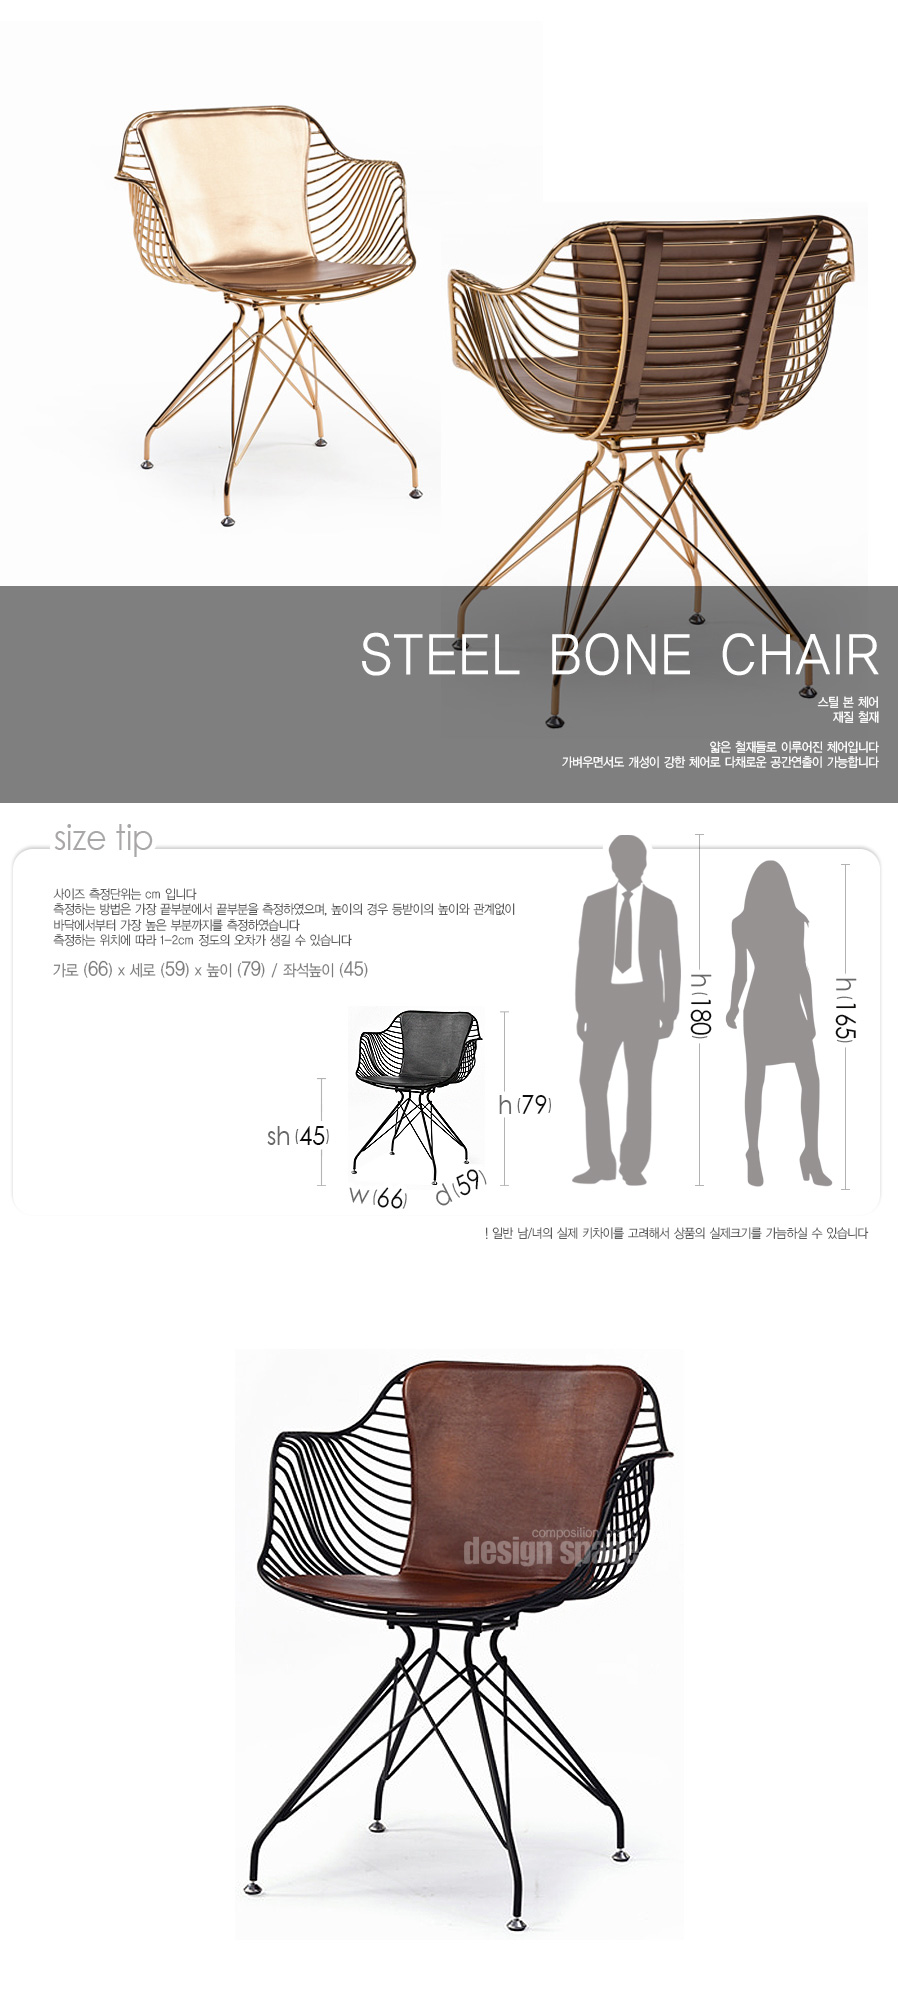 steel-bone-chair_01.jpg